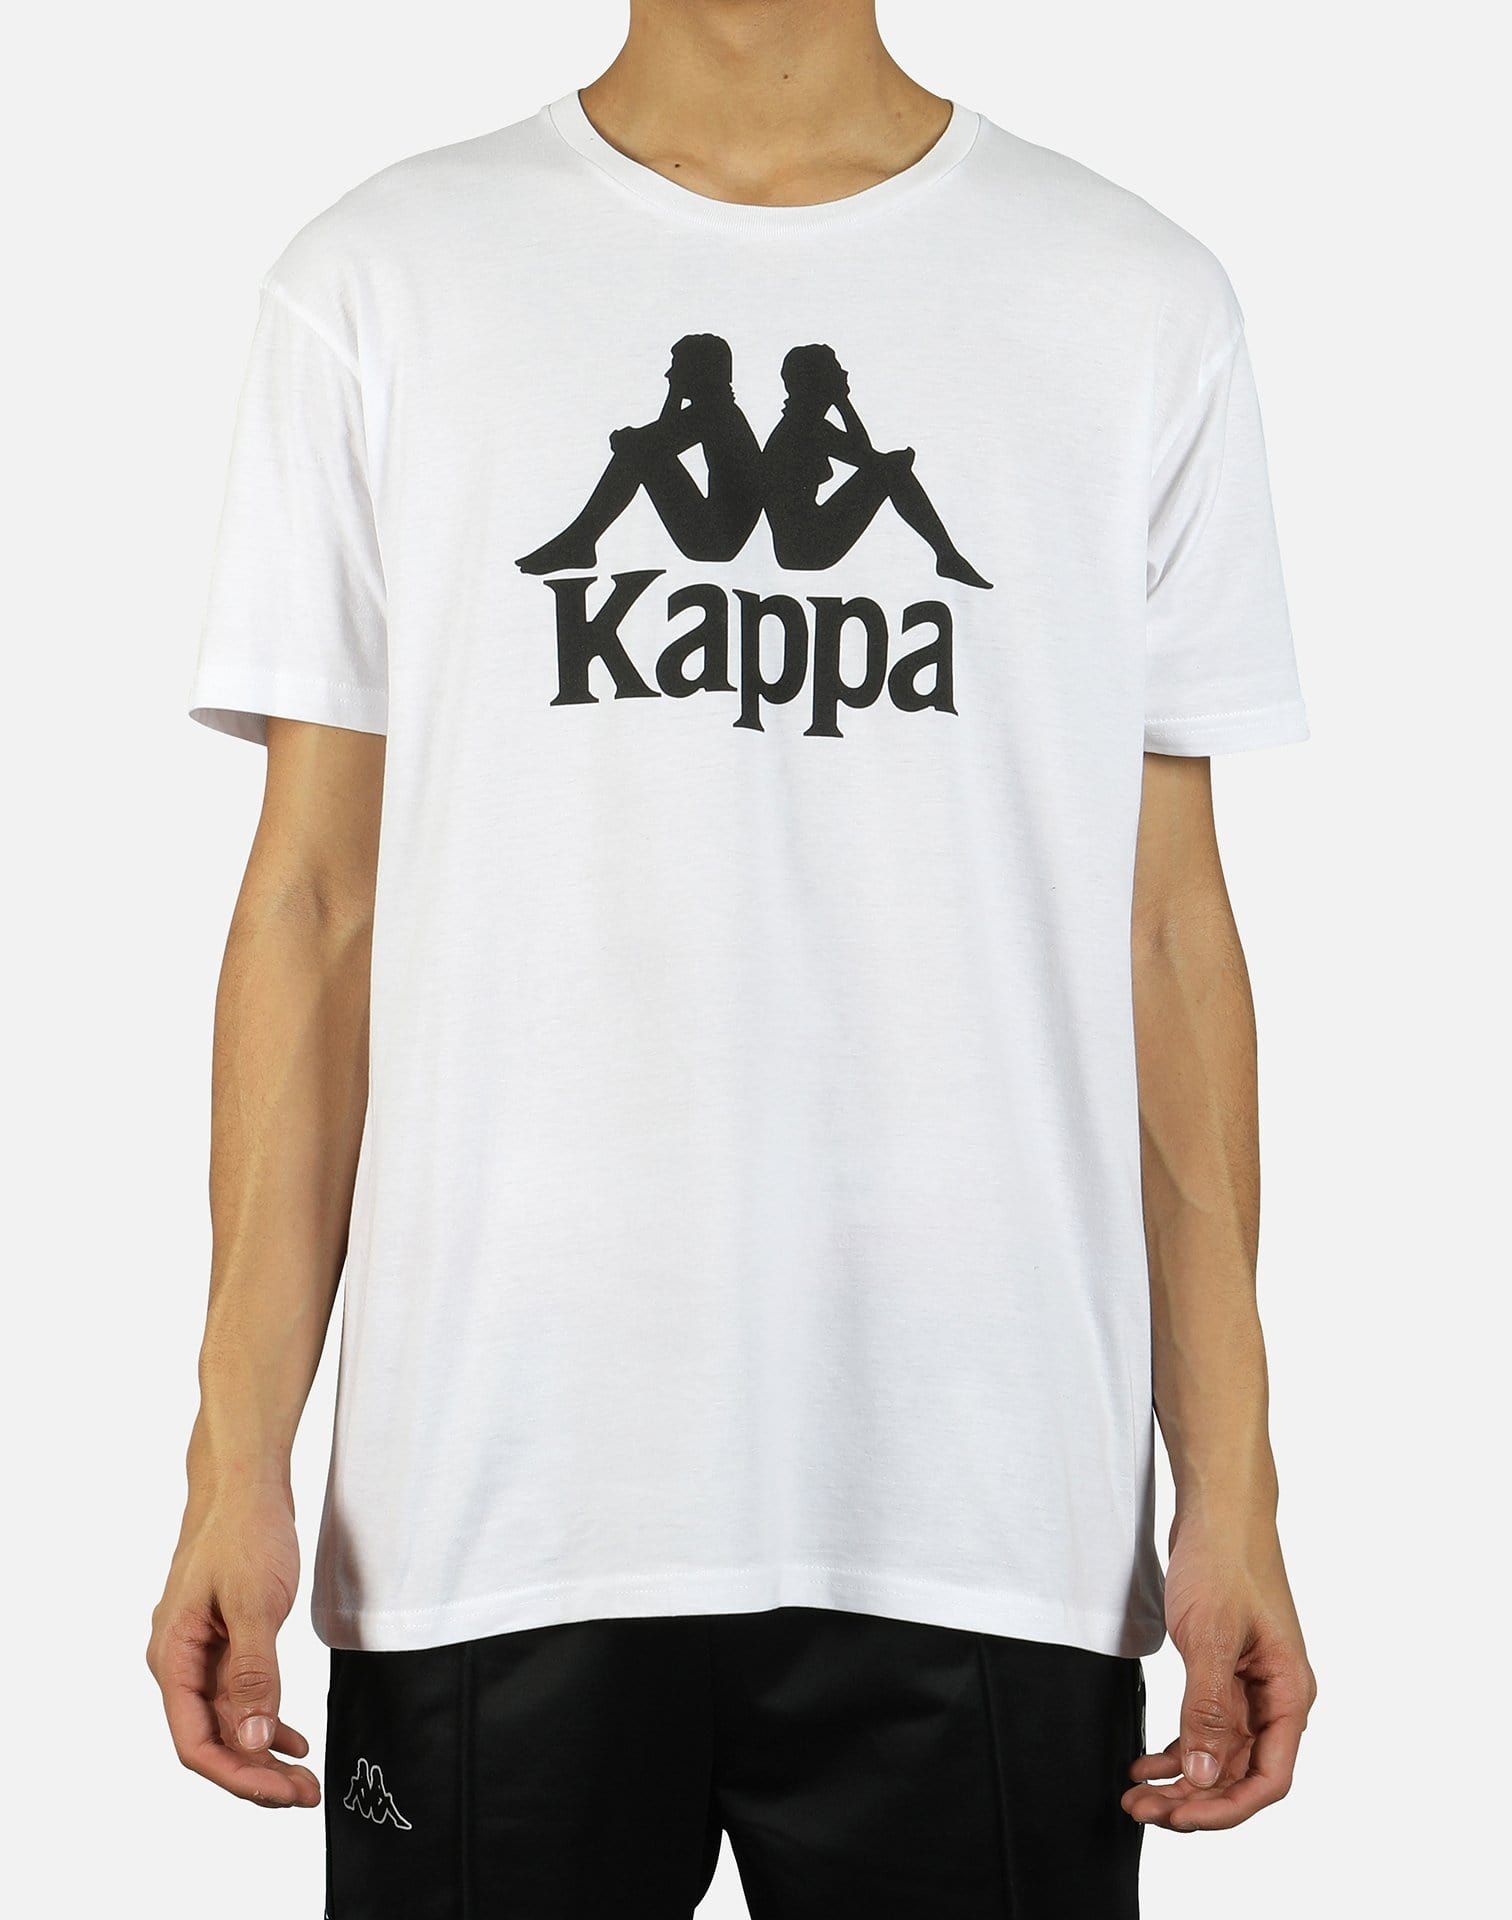 Kappa Men's Estessi Graphic Tee